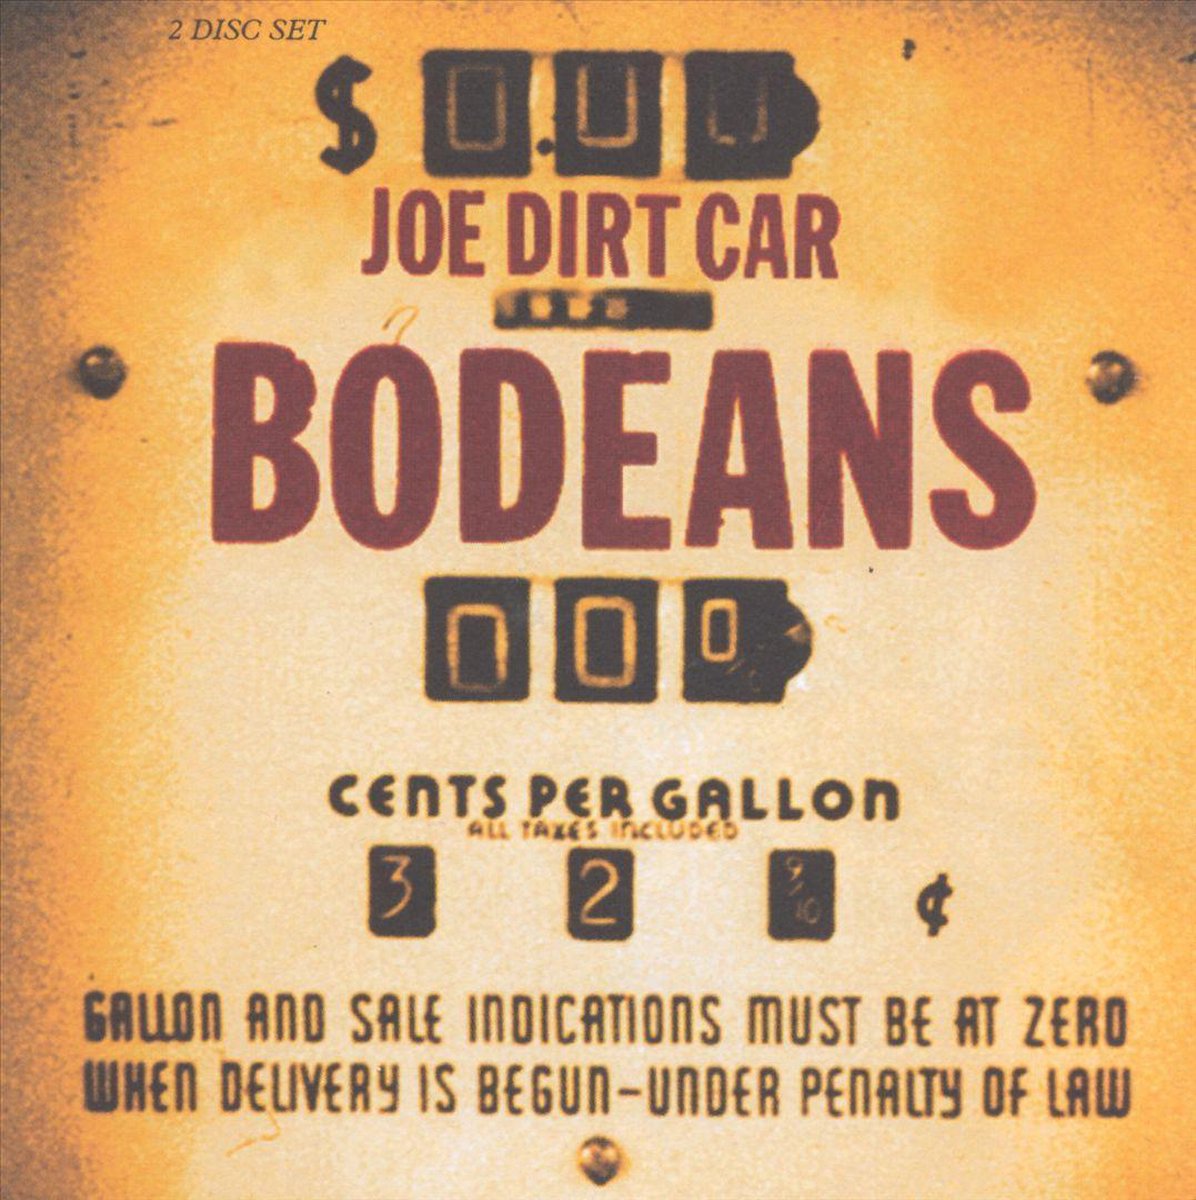 Joe Dirt Car - The BoDeans